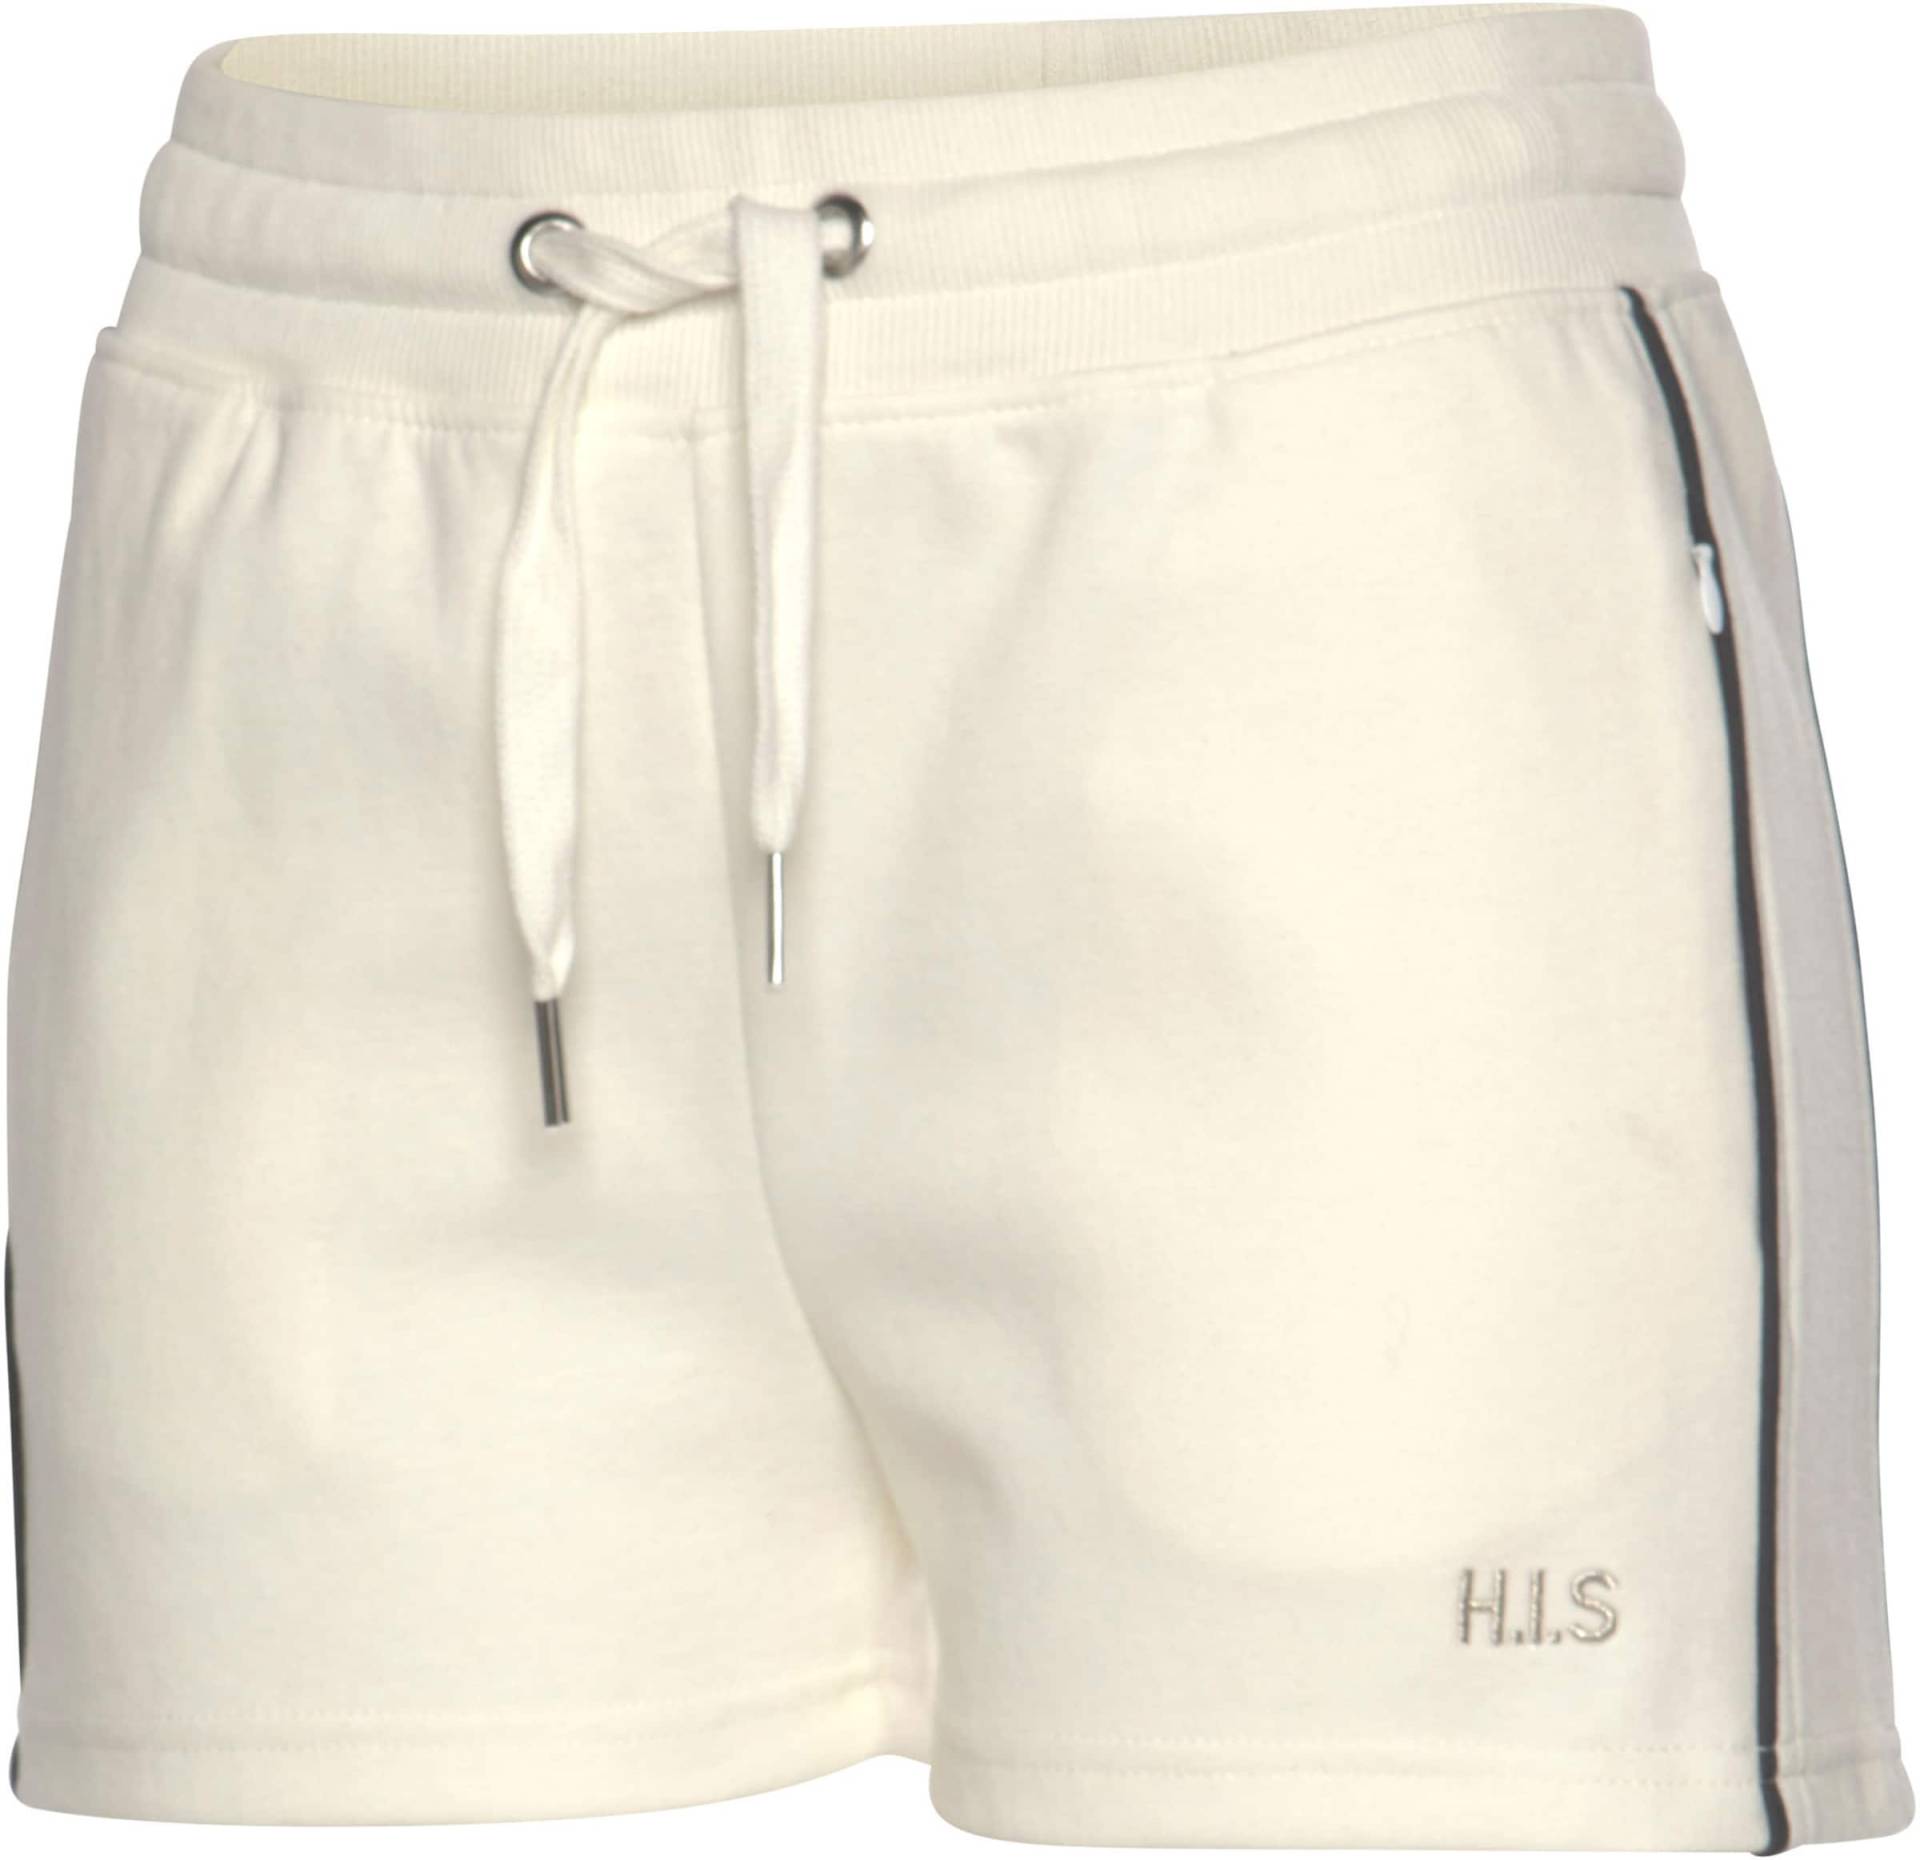 Shorts in ecru von H.I.S